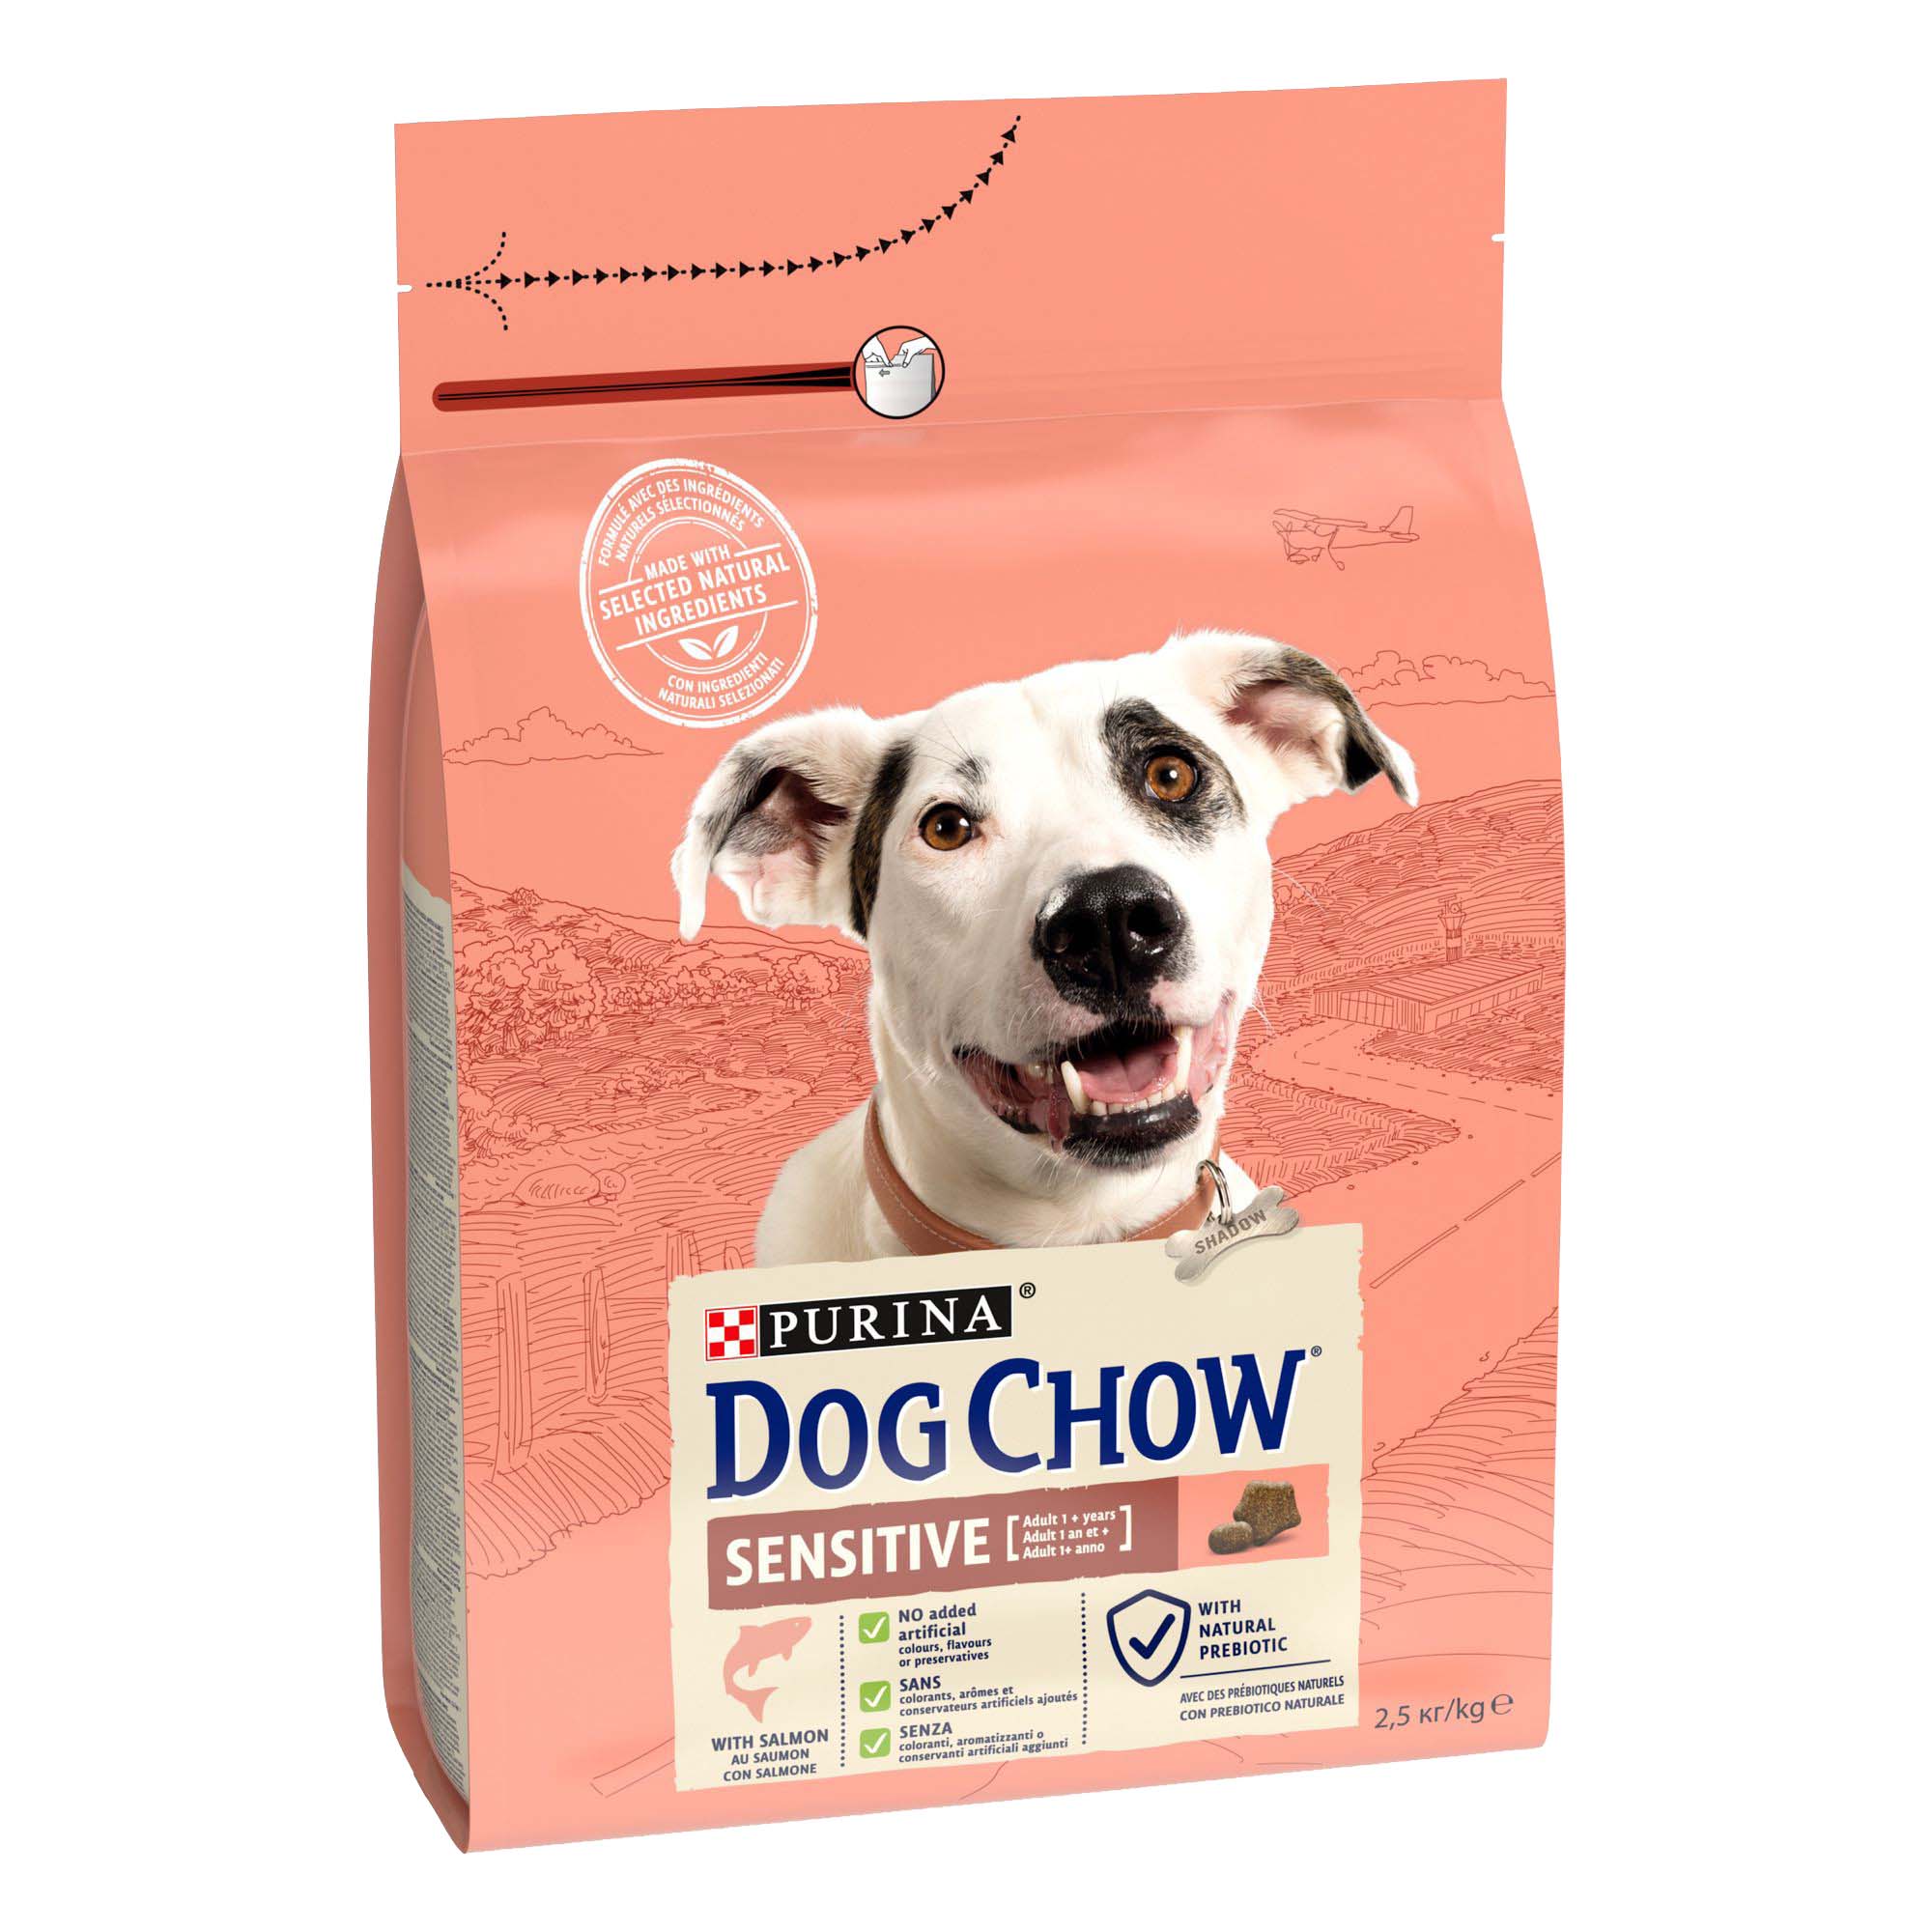 Dog Chow kutya szárazeledel sensitive lazac 2,5kg